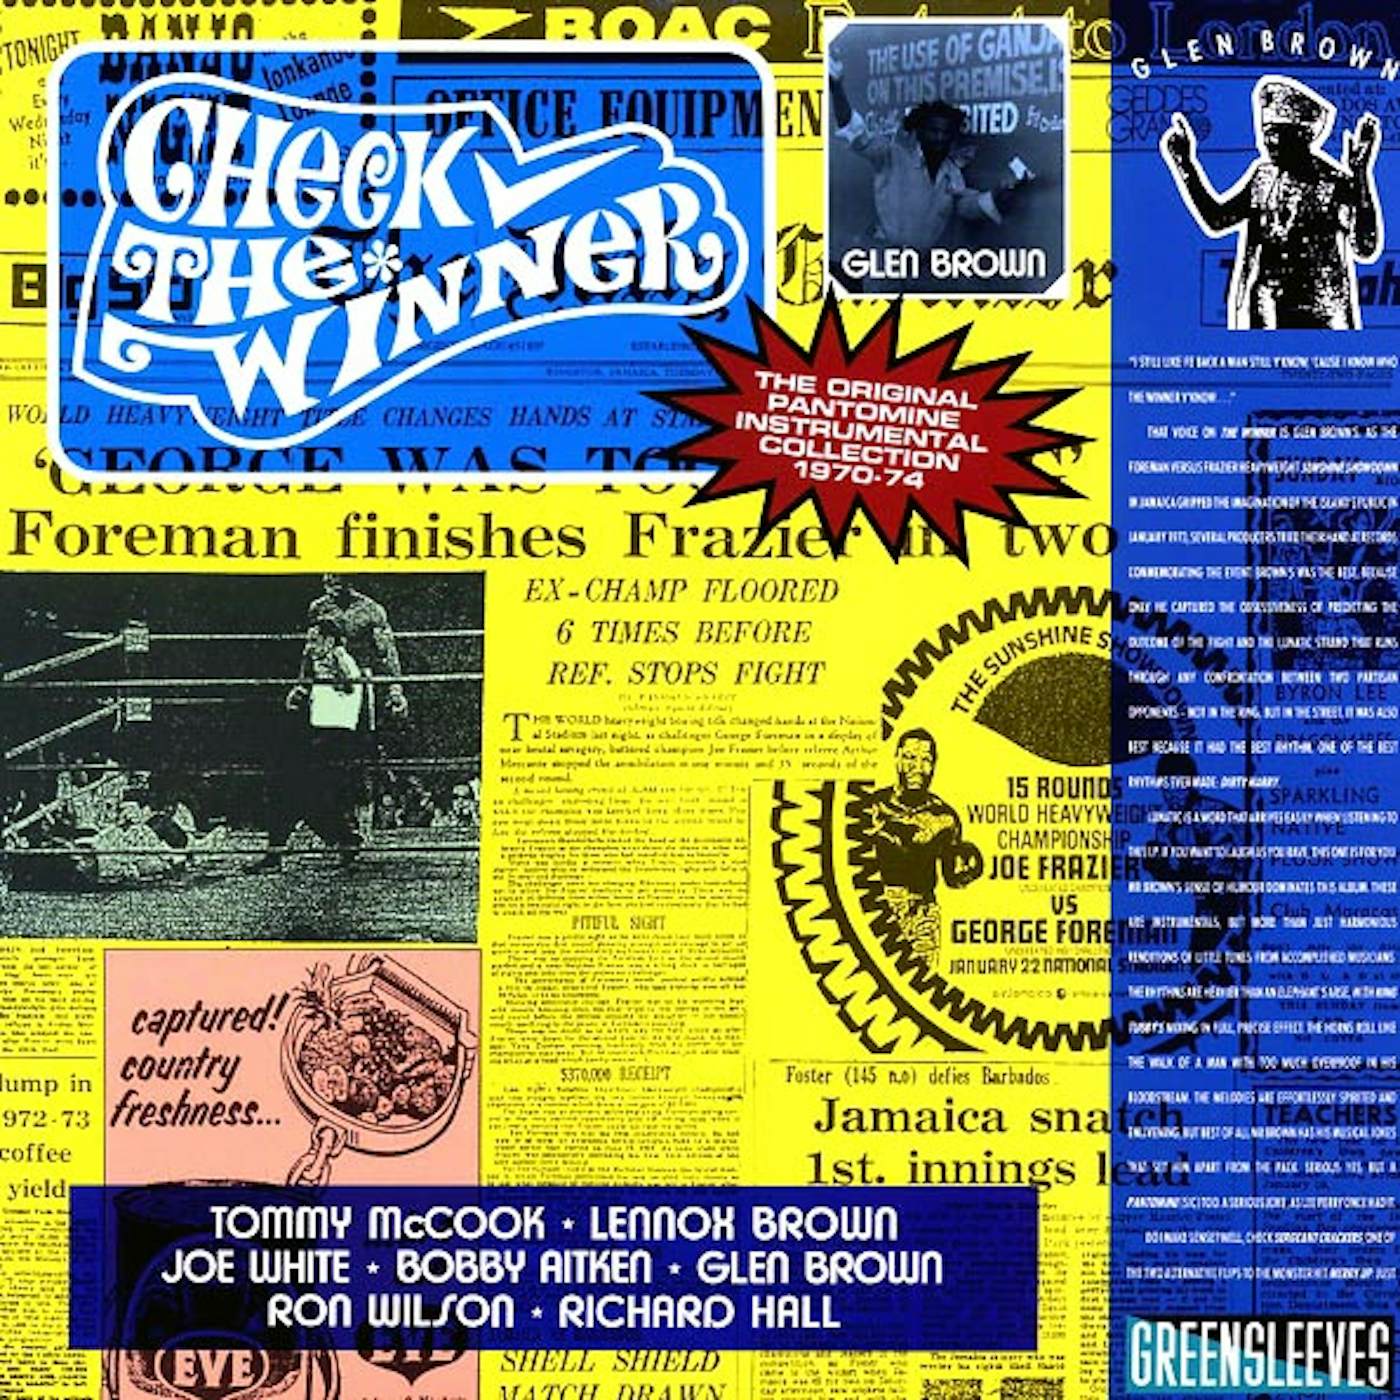 Glen Brown  LP -  Check The Winner: The Original Pantomine Instrumental Collection 197074 (Vinyl)